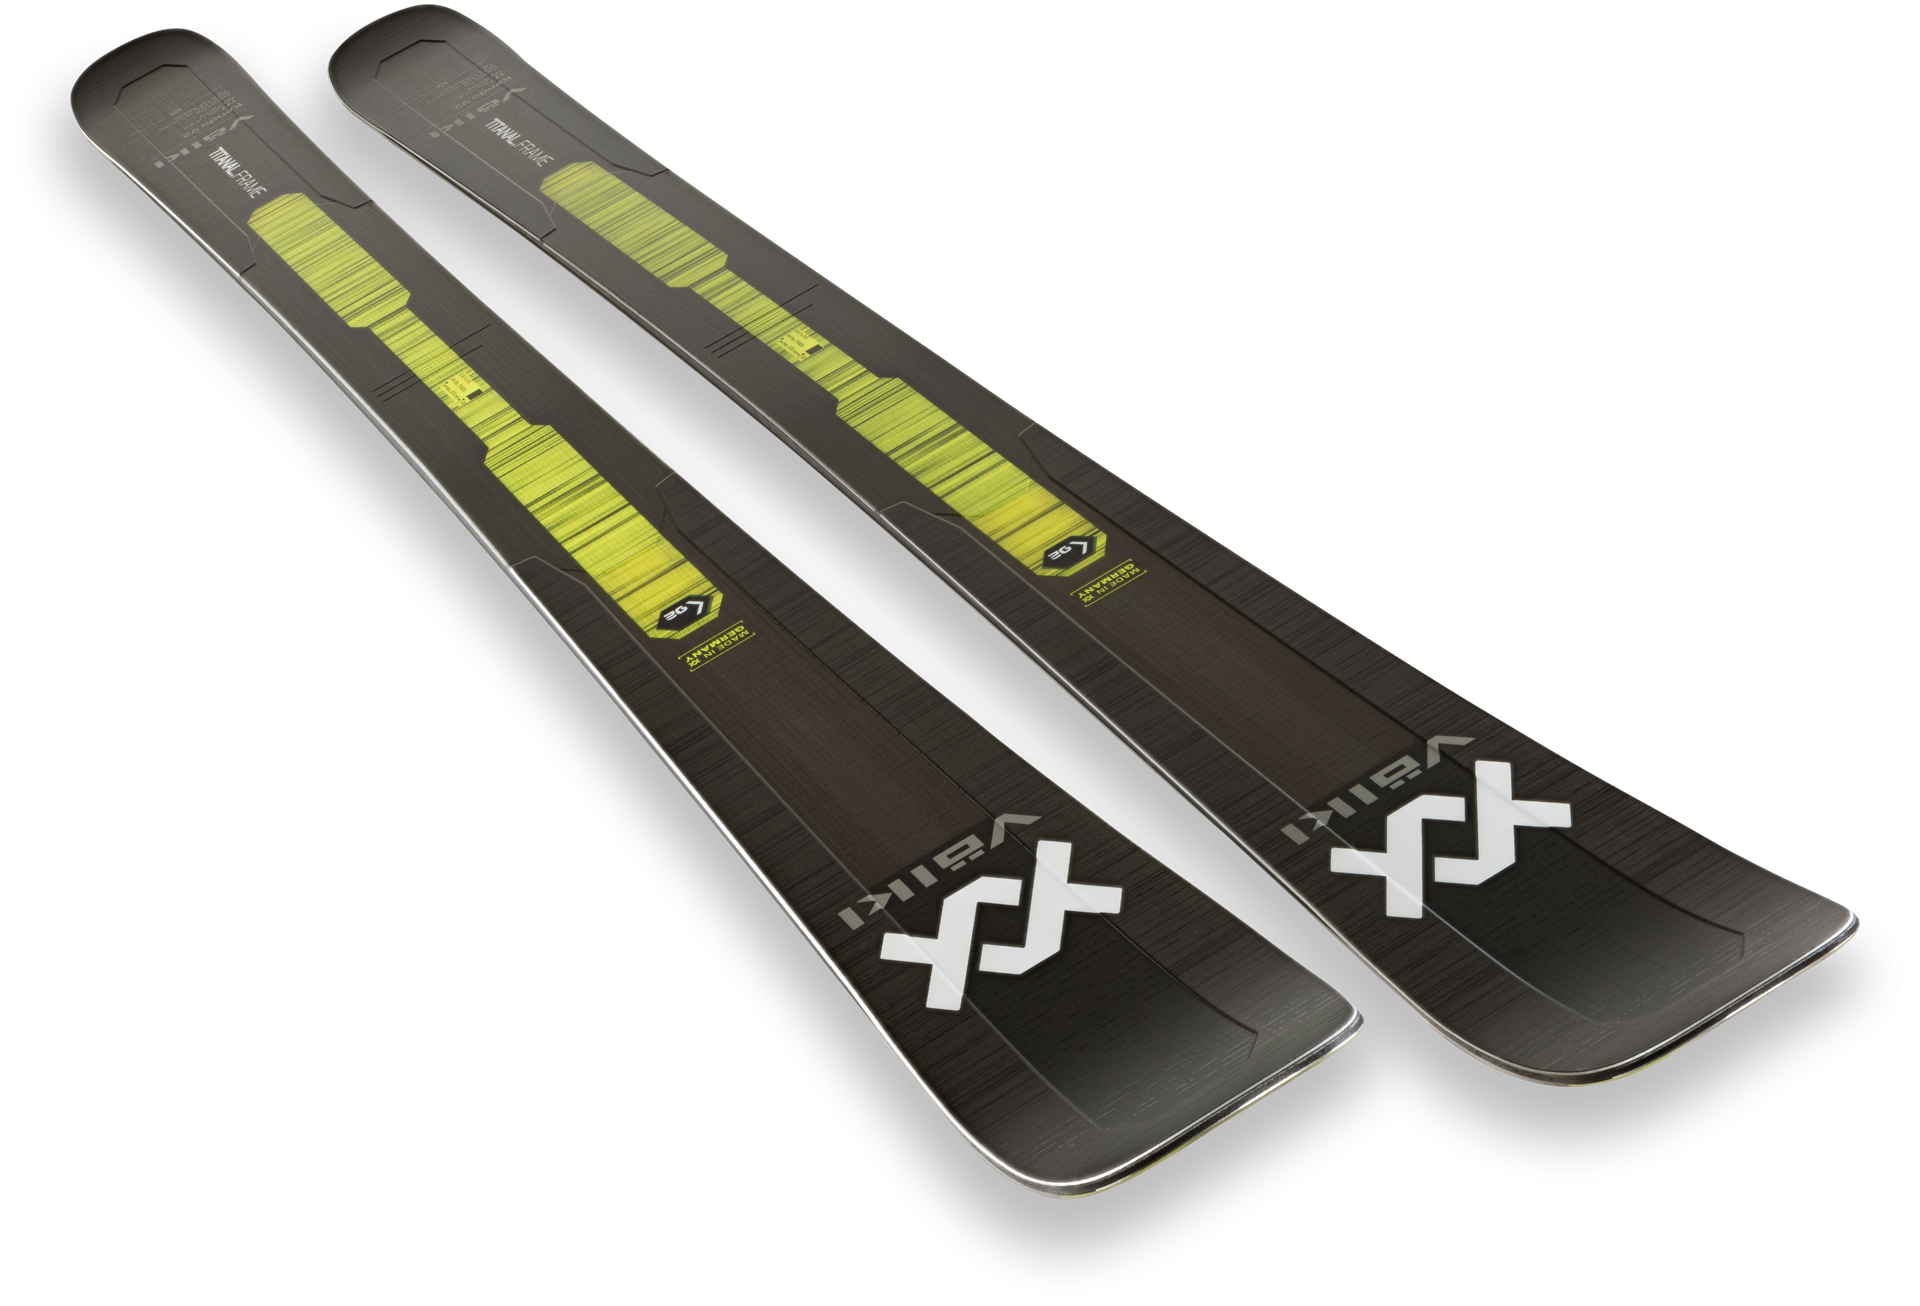 Ski Kendo 92 2020